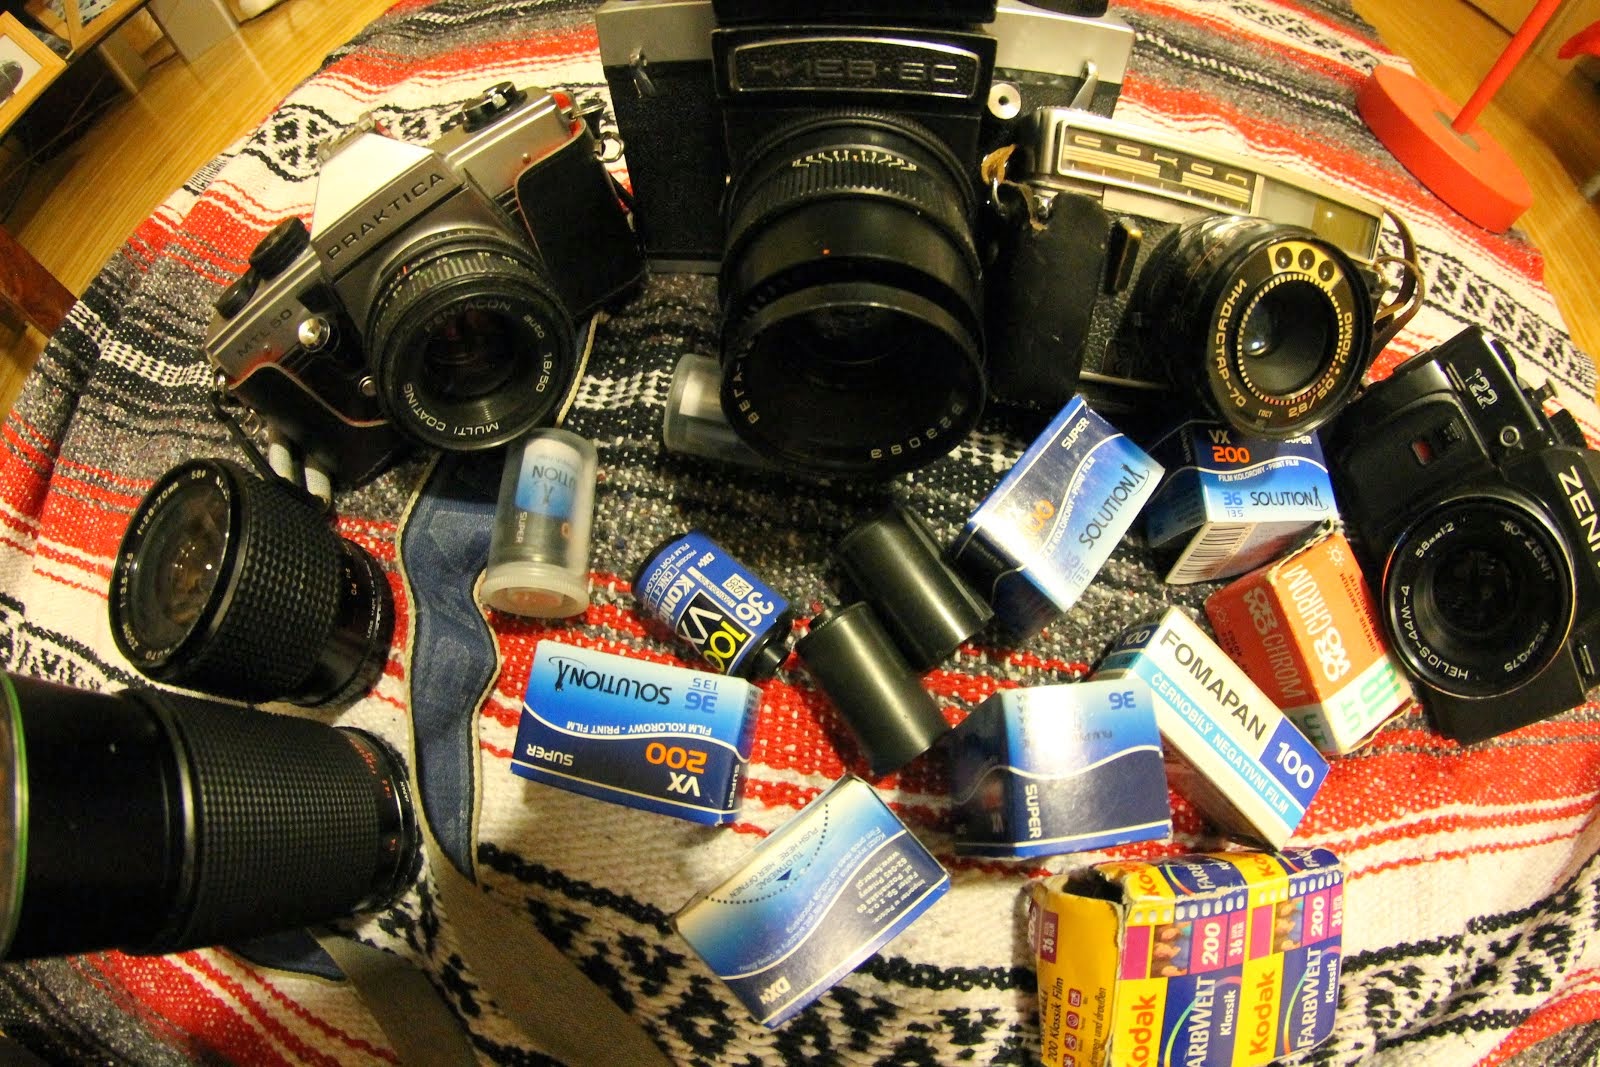 Part of my analog photo cameras